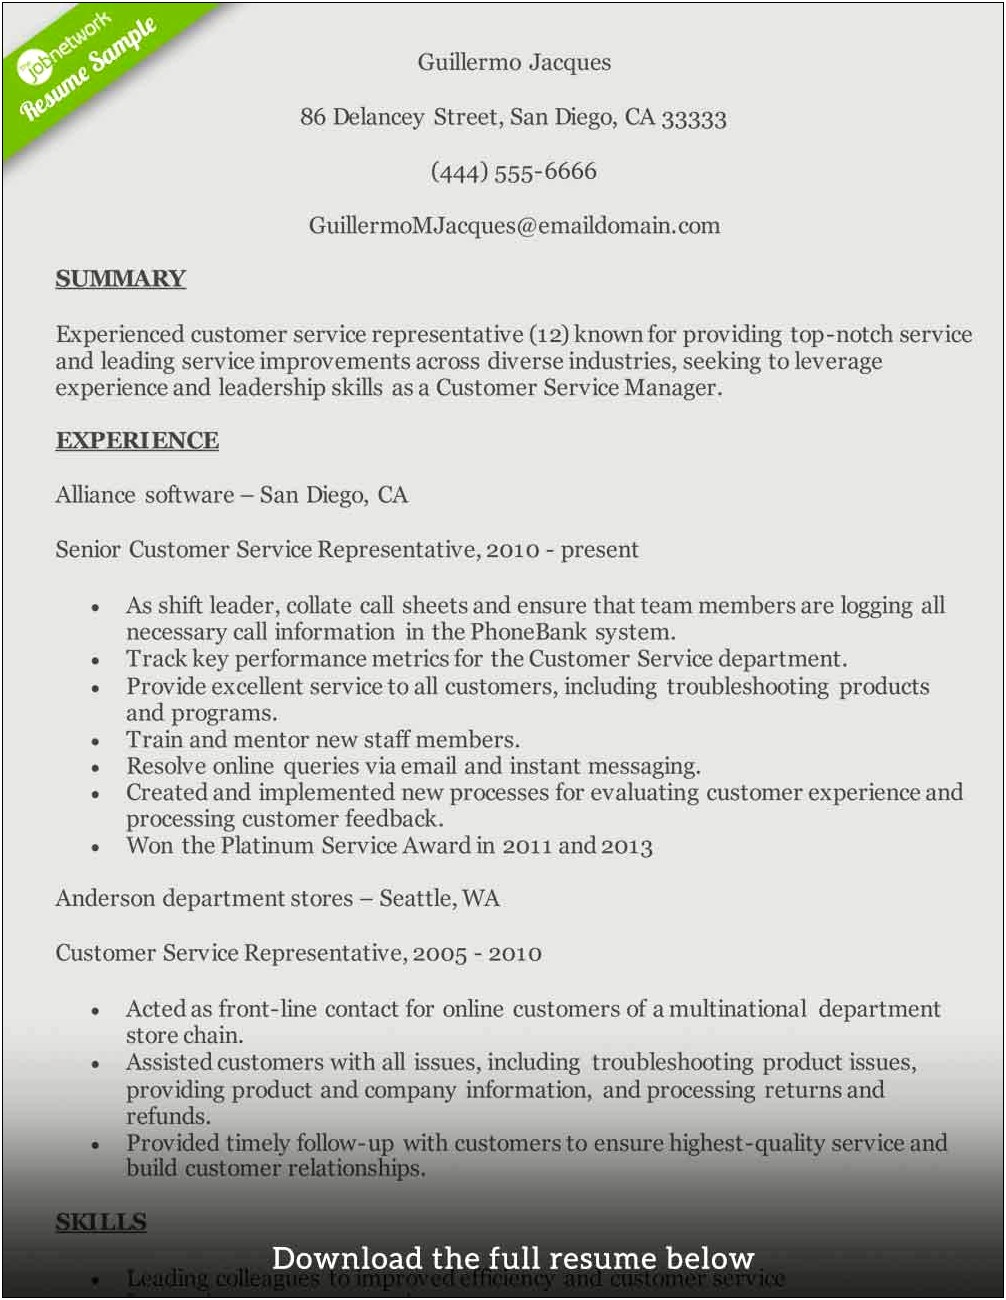 Sample Of Customer Service Associate Resume